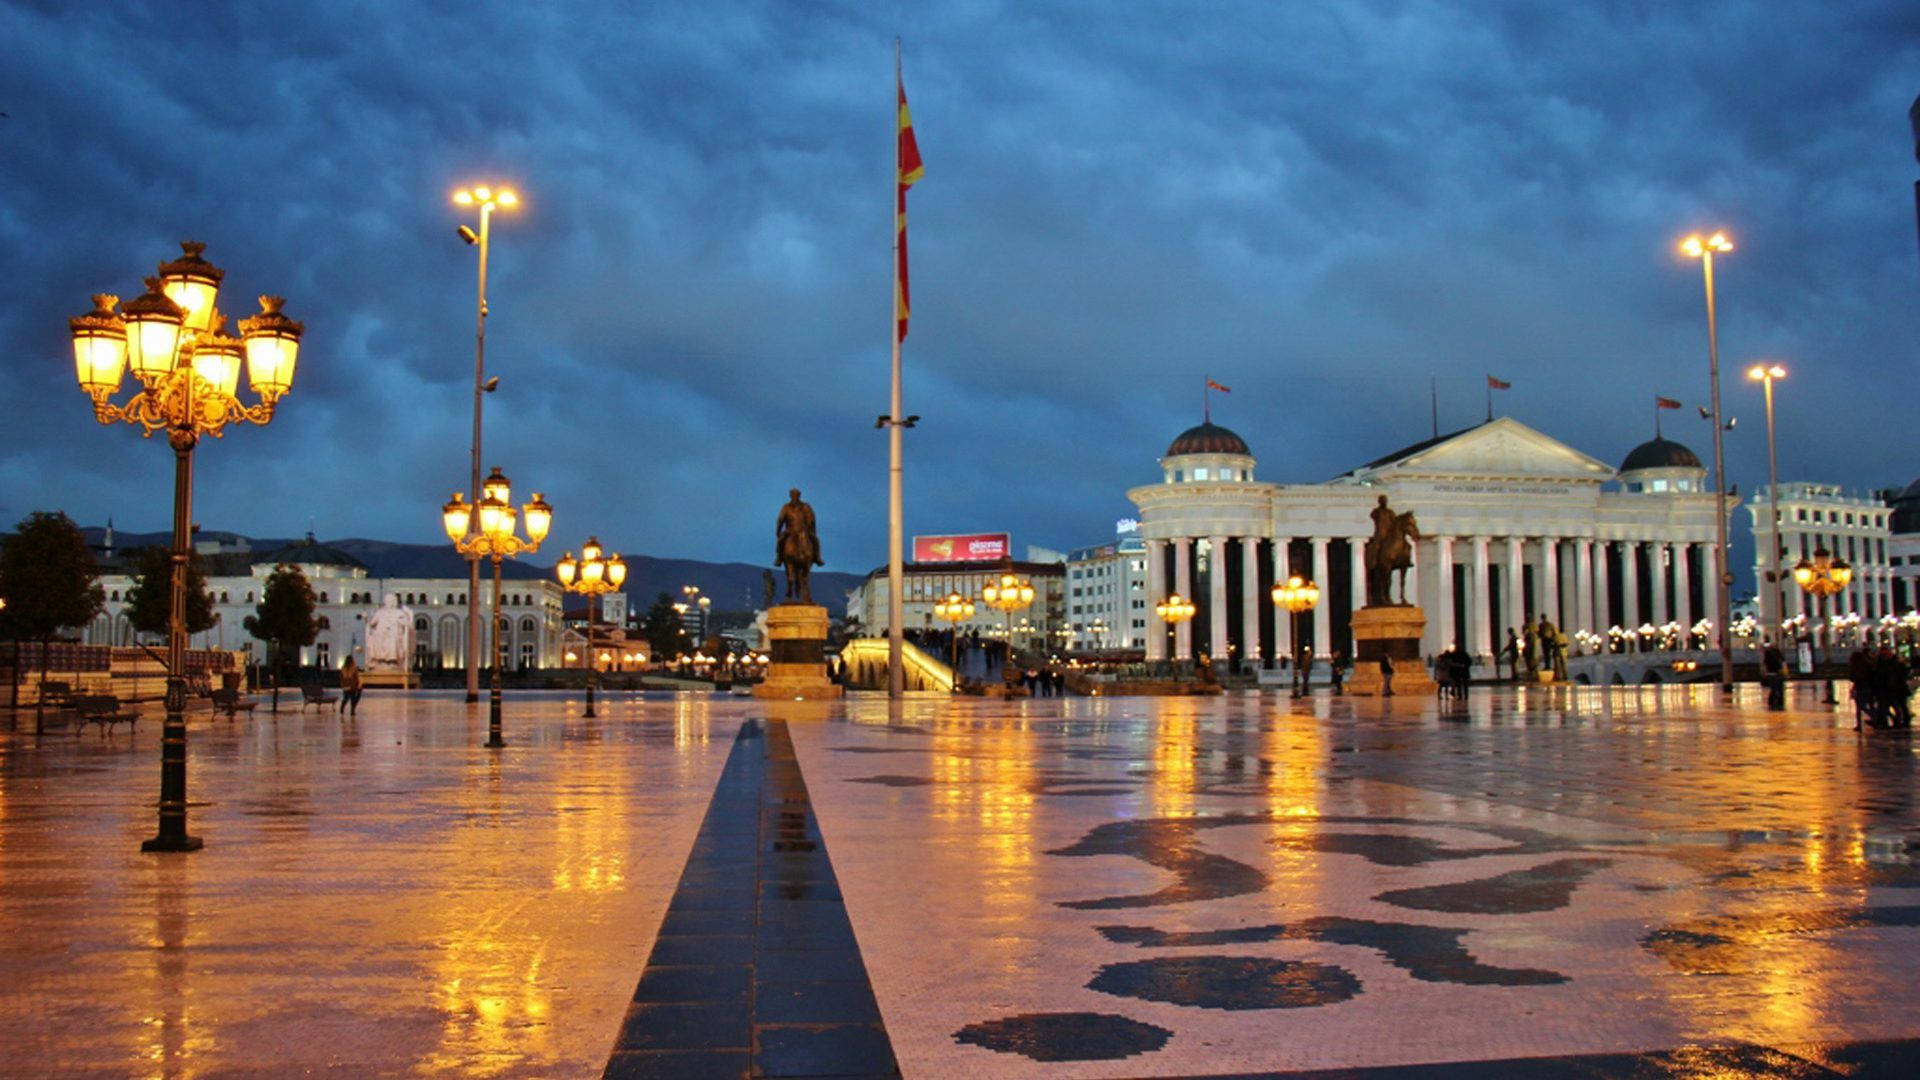 Macedonia Square At Night Background